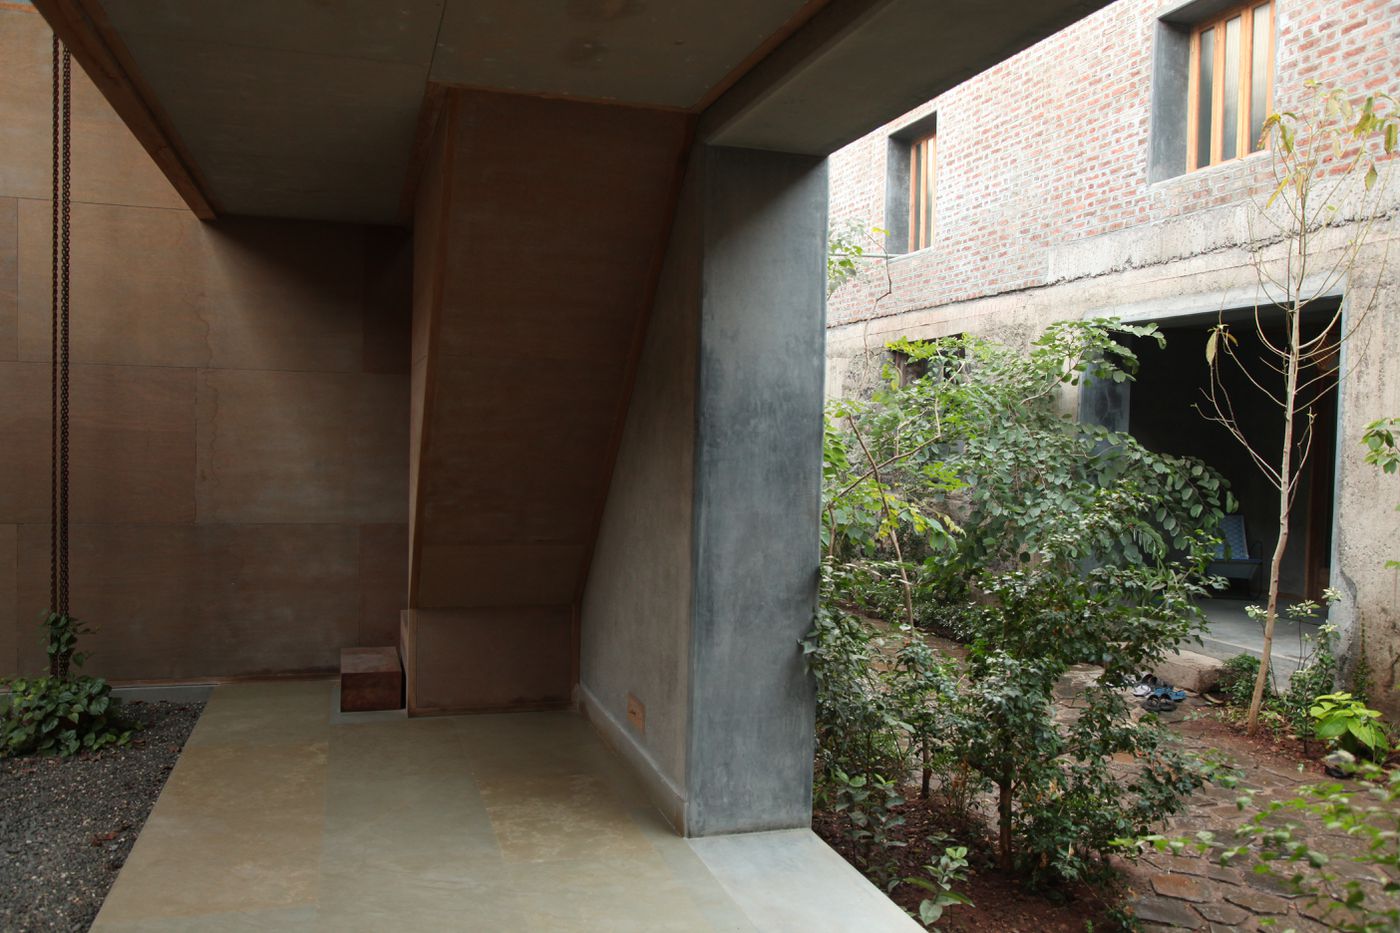 Saat Rasta : view of threshold between interior courtyard and central passageway